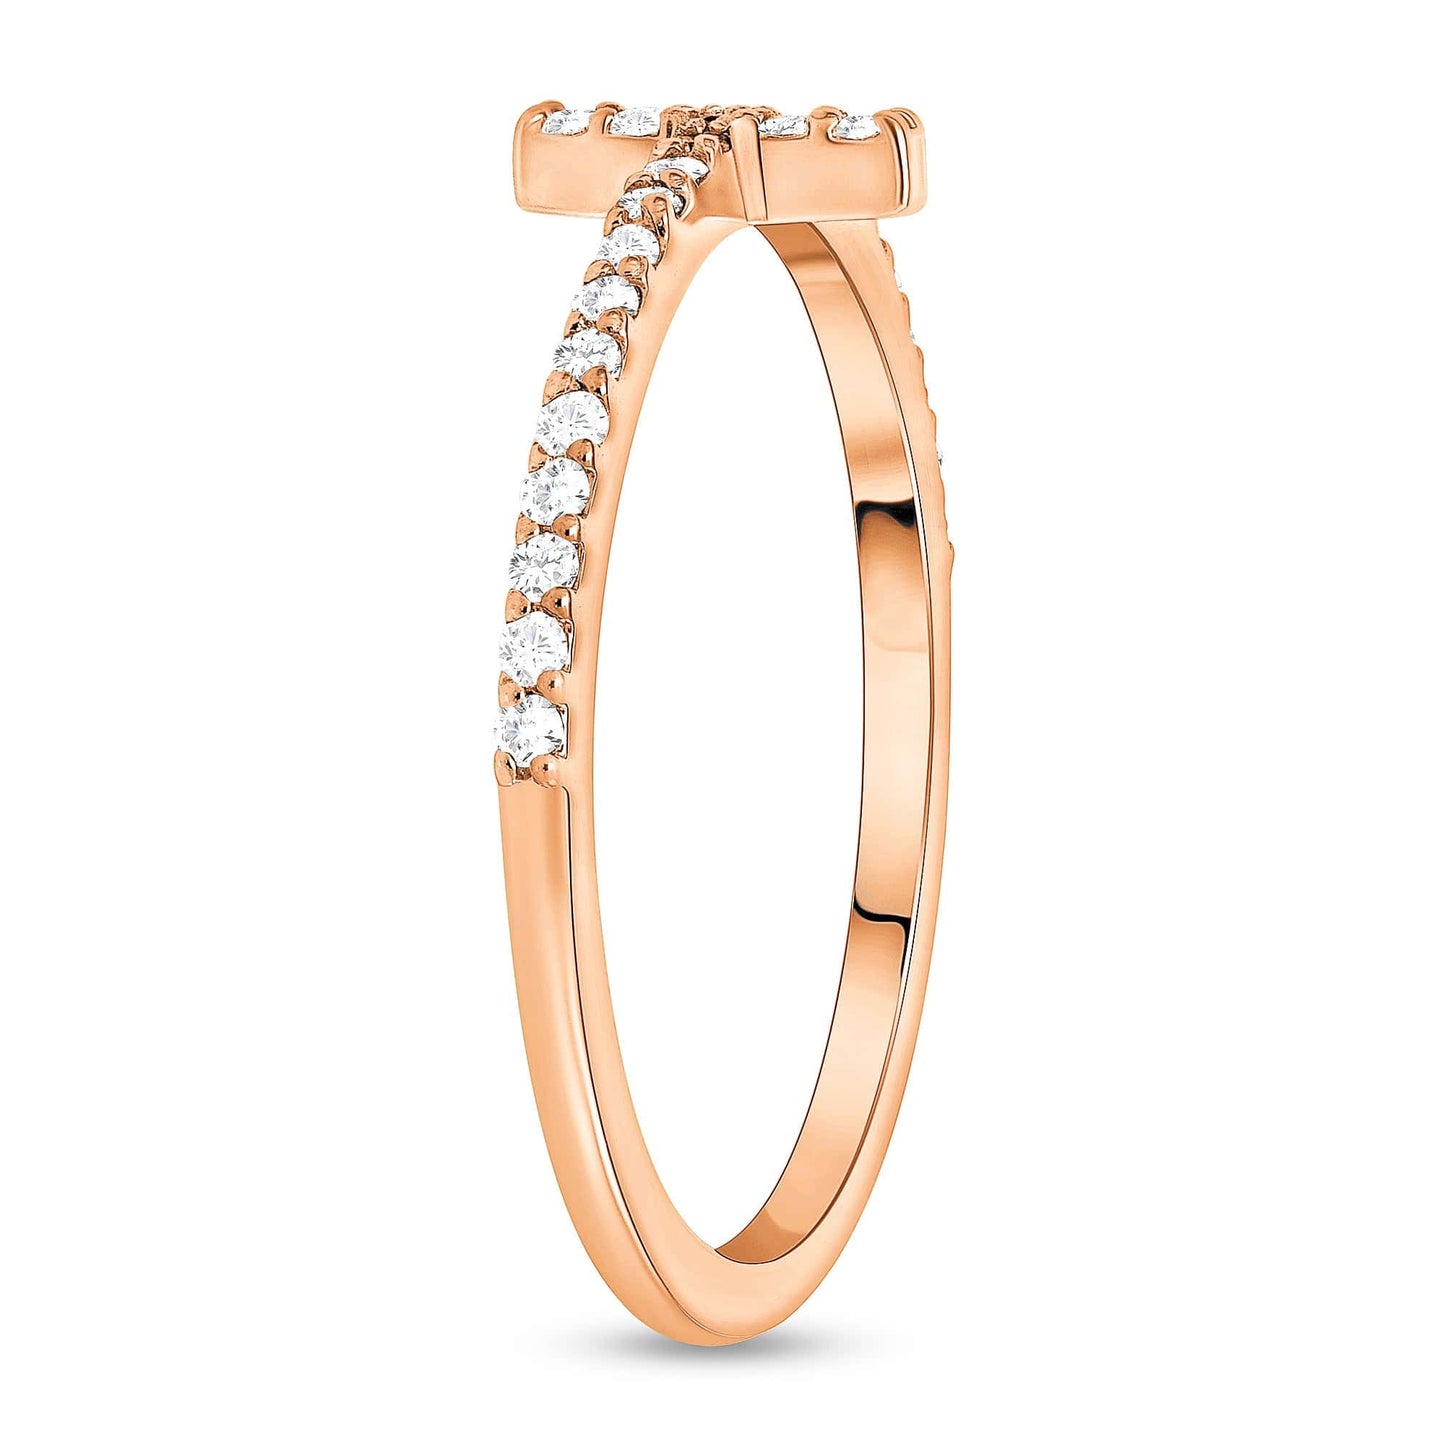 Load image into Gallery viewer, Thin Diamond Cross Ring - Happy Jewelers Fine Jewelry Lifetime Warranty
